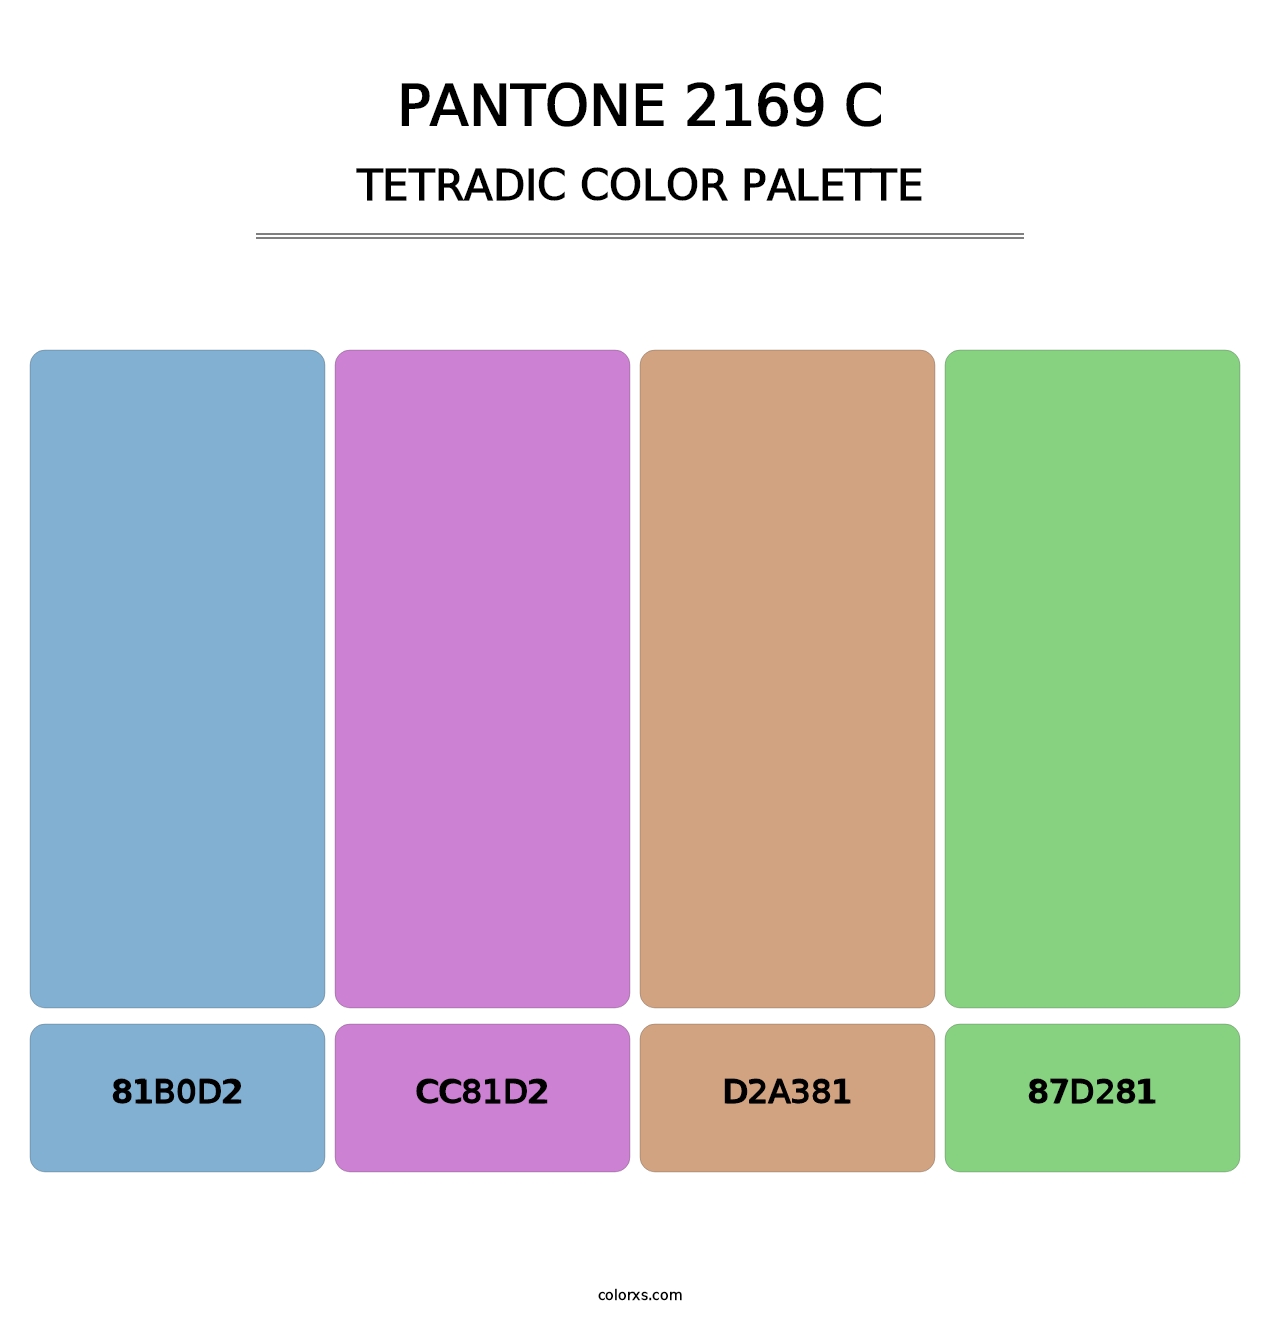 PANTONE 2169 C - Tetradic Color Palette